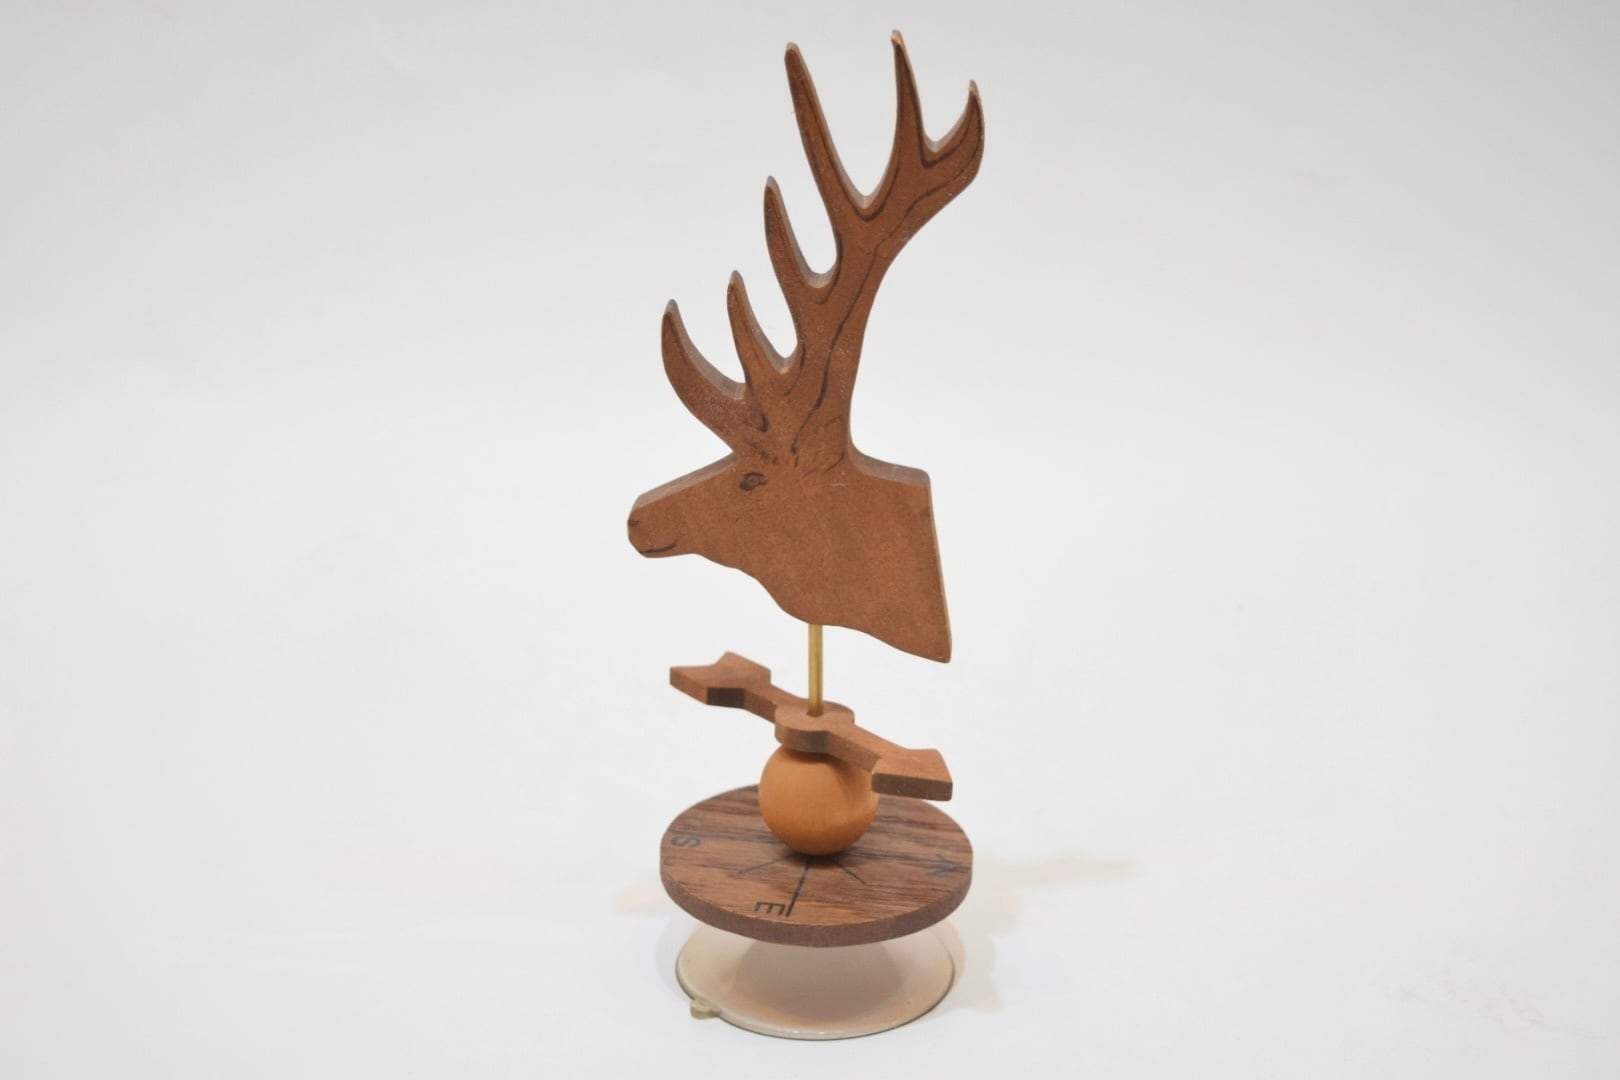 USED ELK wooden ornament -01843